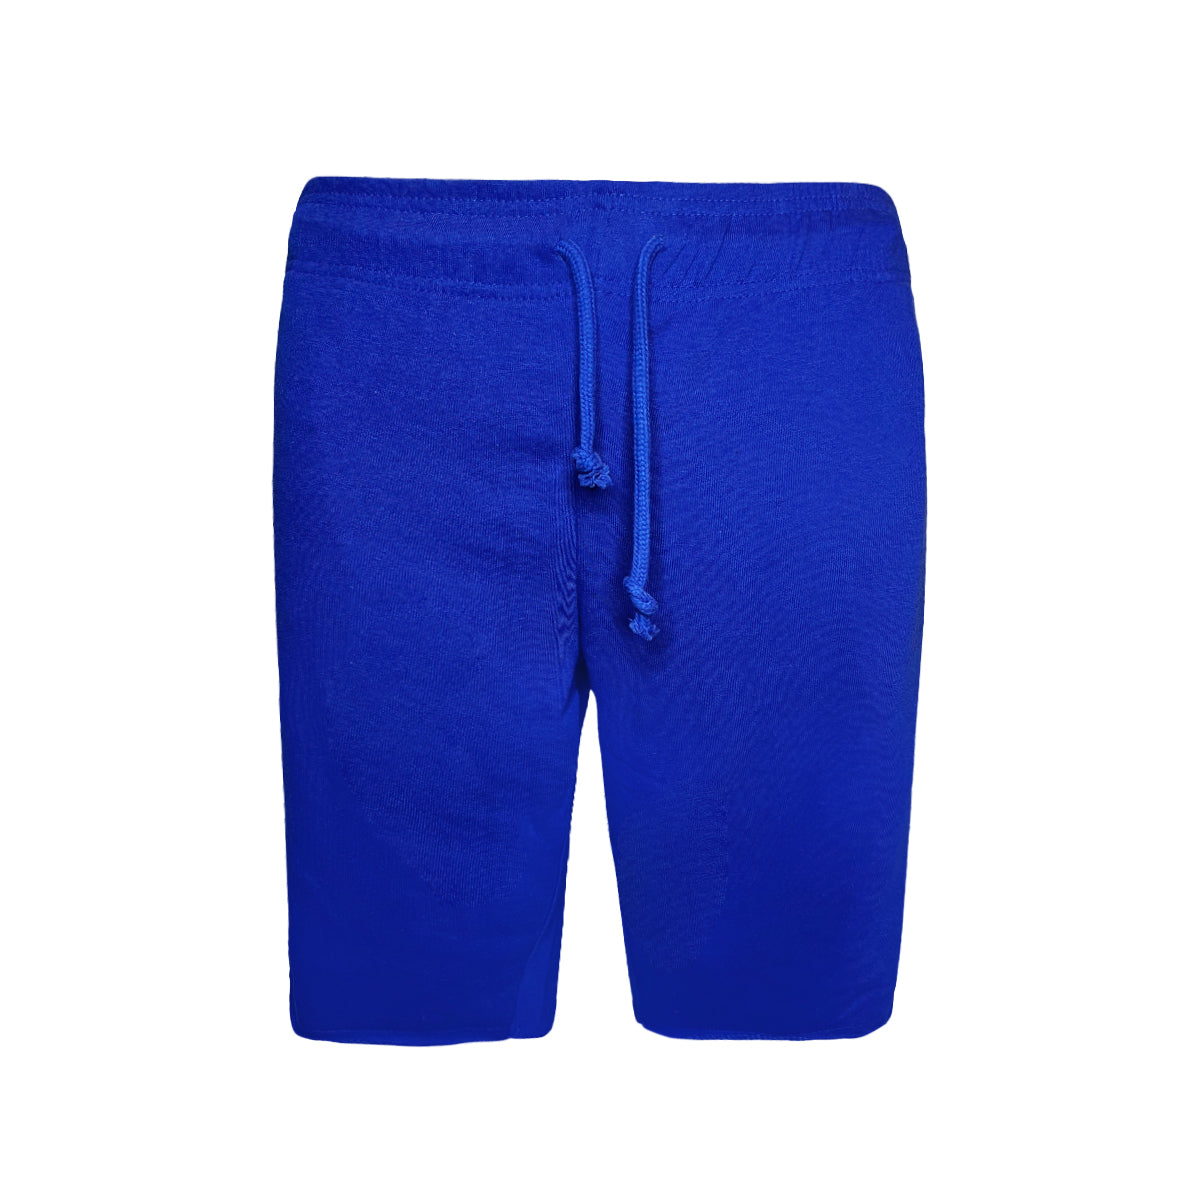 6030 - Adult Smart Shorts-Royal Blue Color